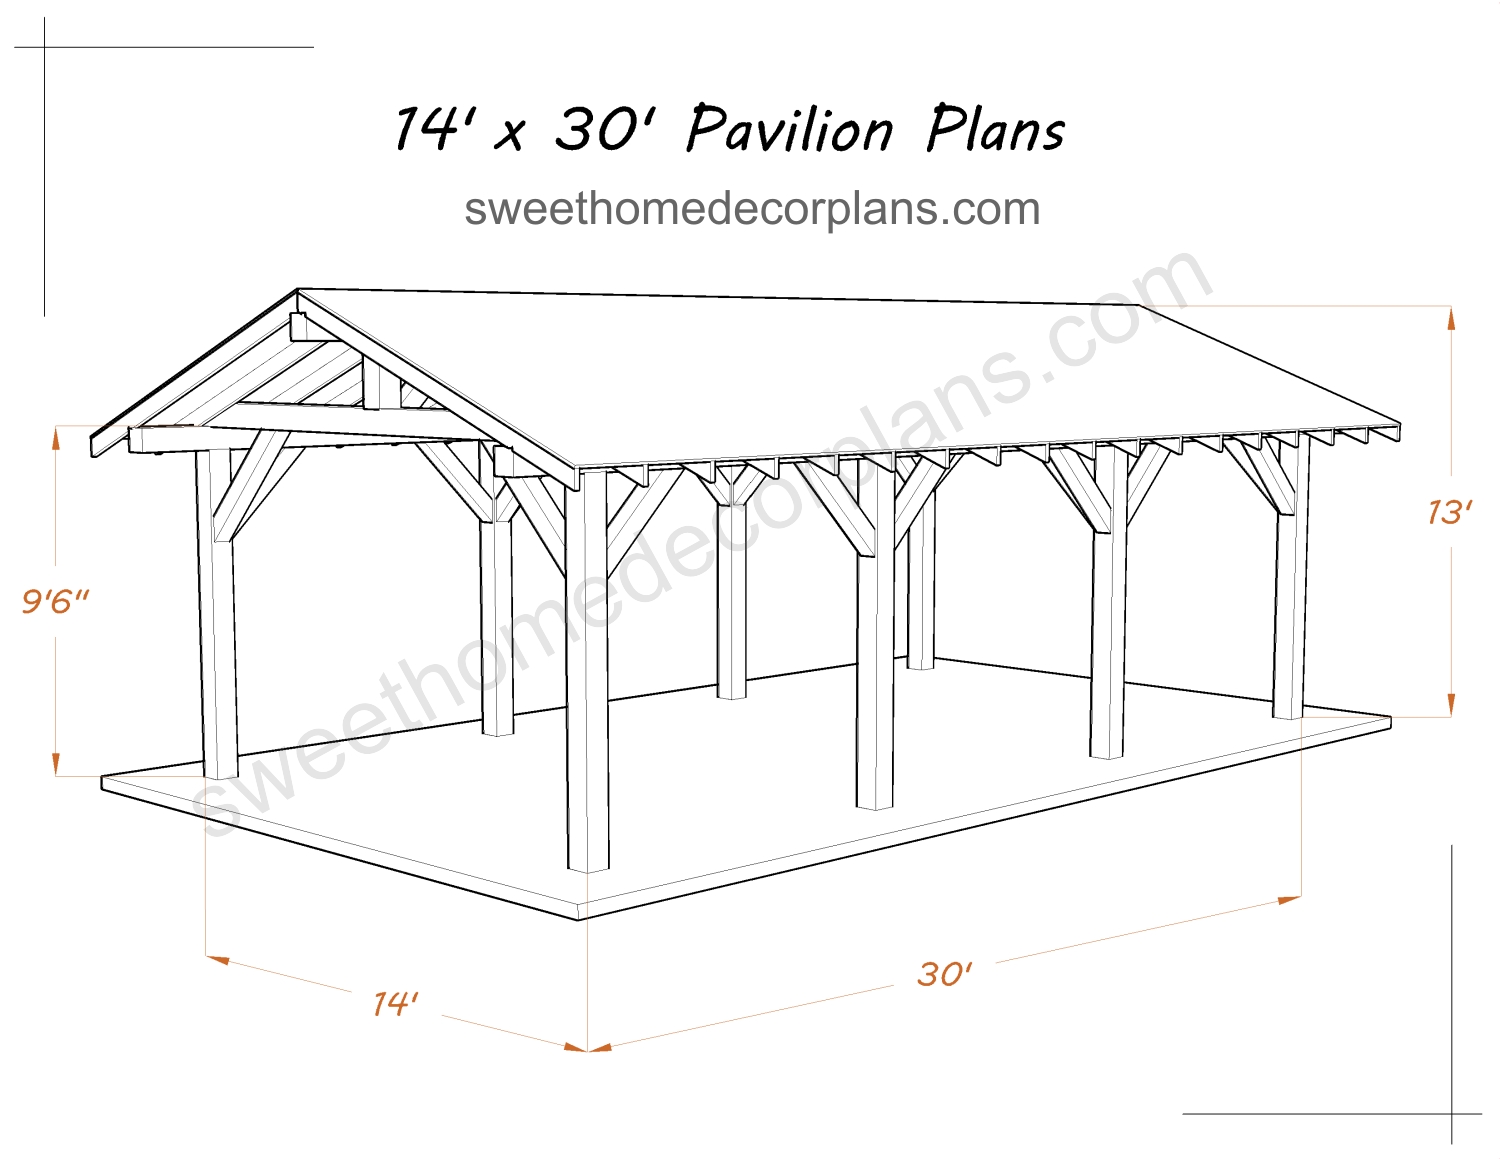 Diy-14-х-30-gable-pavilion-plans-in-pdf-carport-patio-gazebo